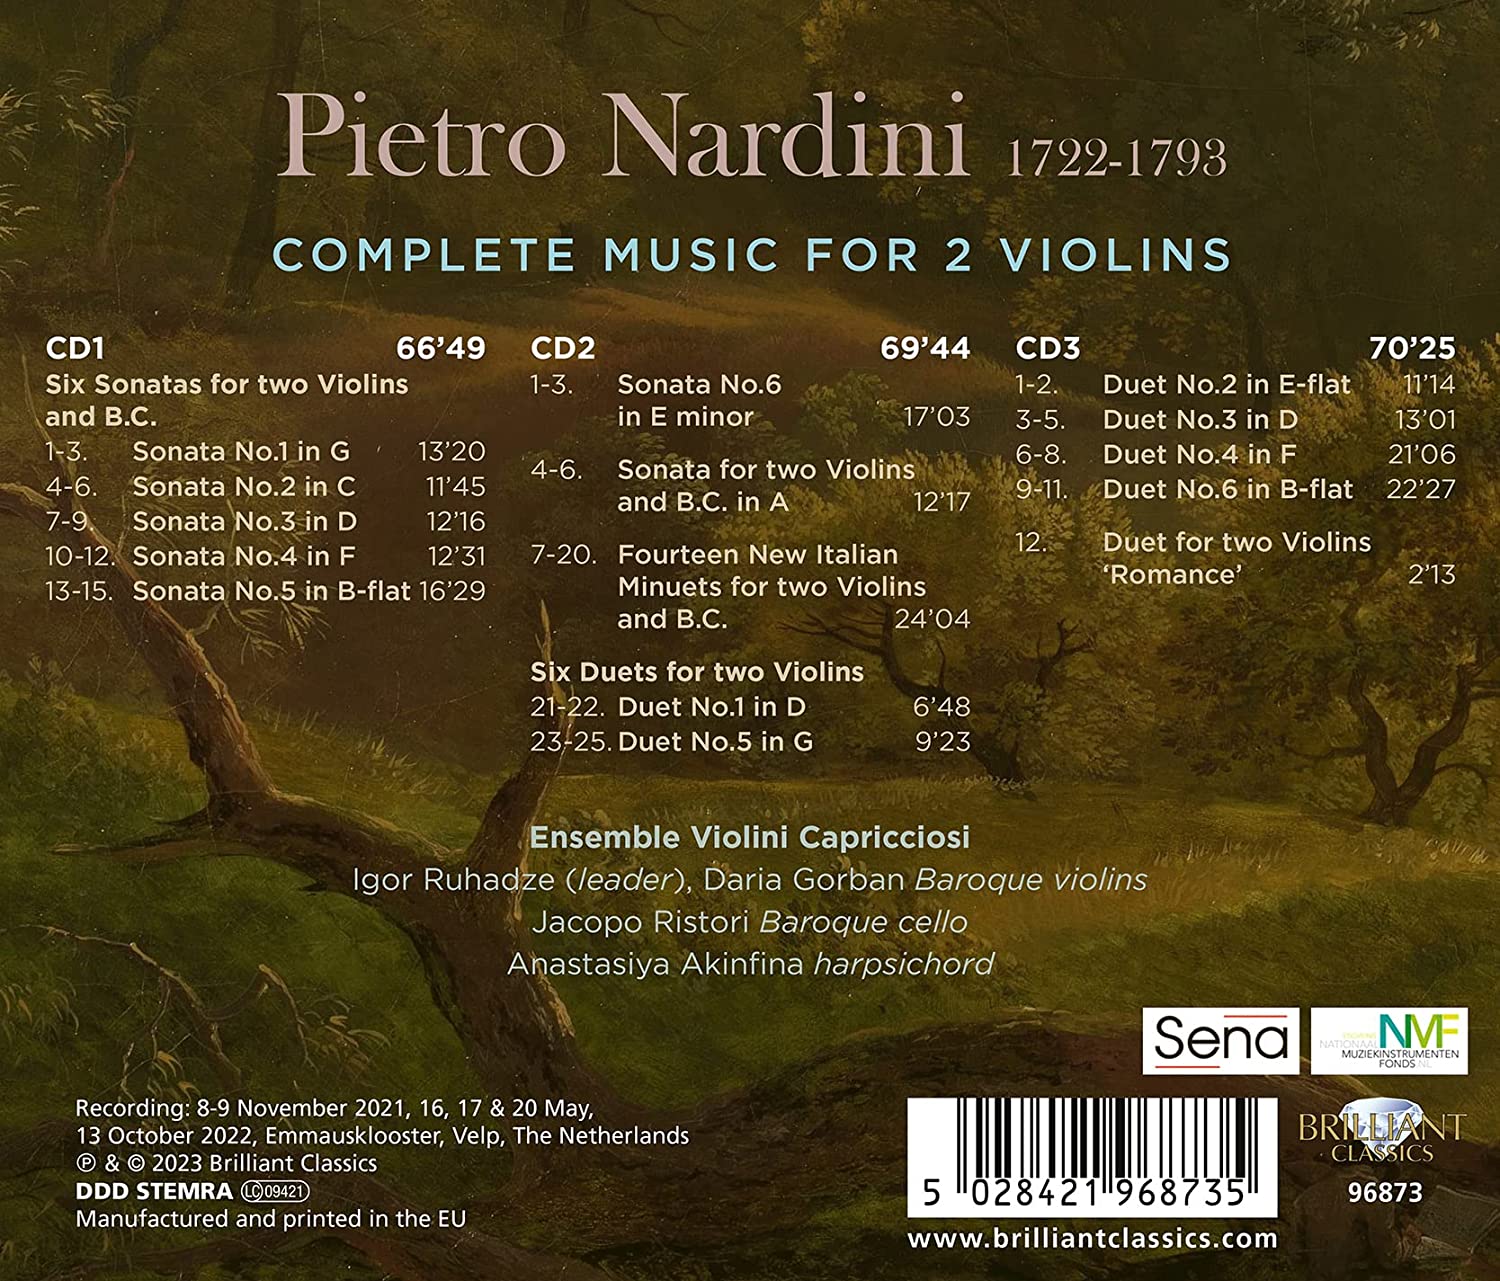 Ensemble Violini Capricciosi 나르디니: 두 대의 바이올린을 위한 작품 전곡 (Nardini: Complete Music for 2 Violins)